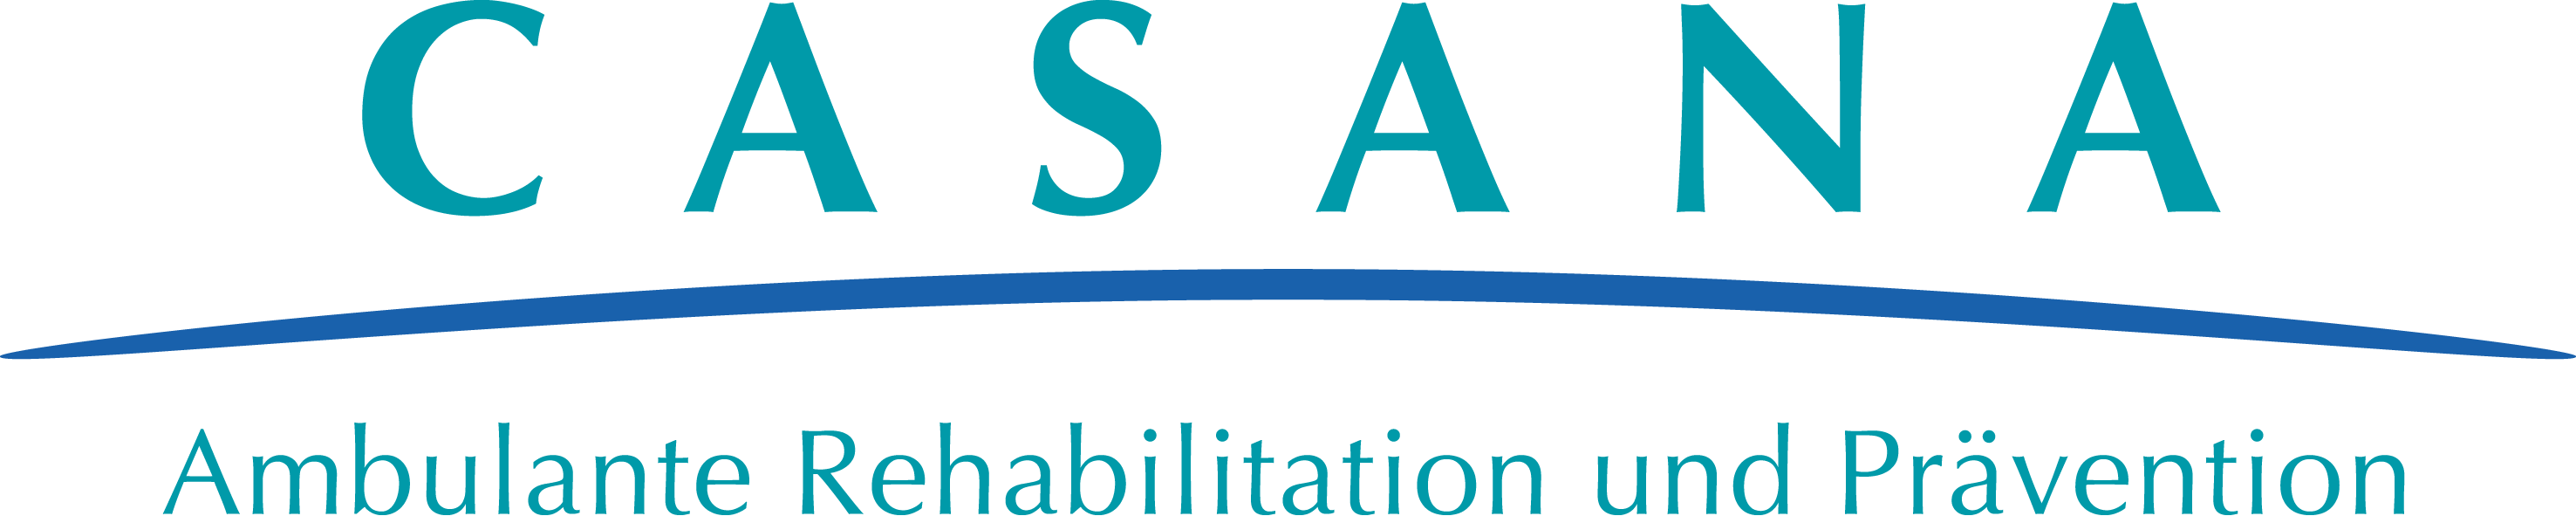 CASANA - Ambulante Rehabilitation und Prävention